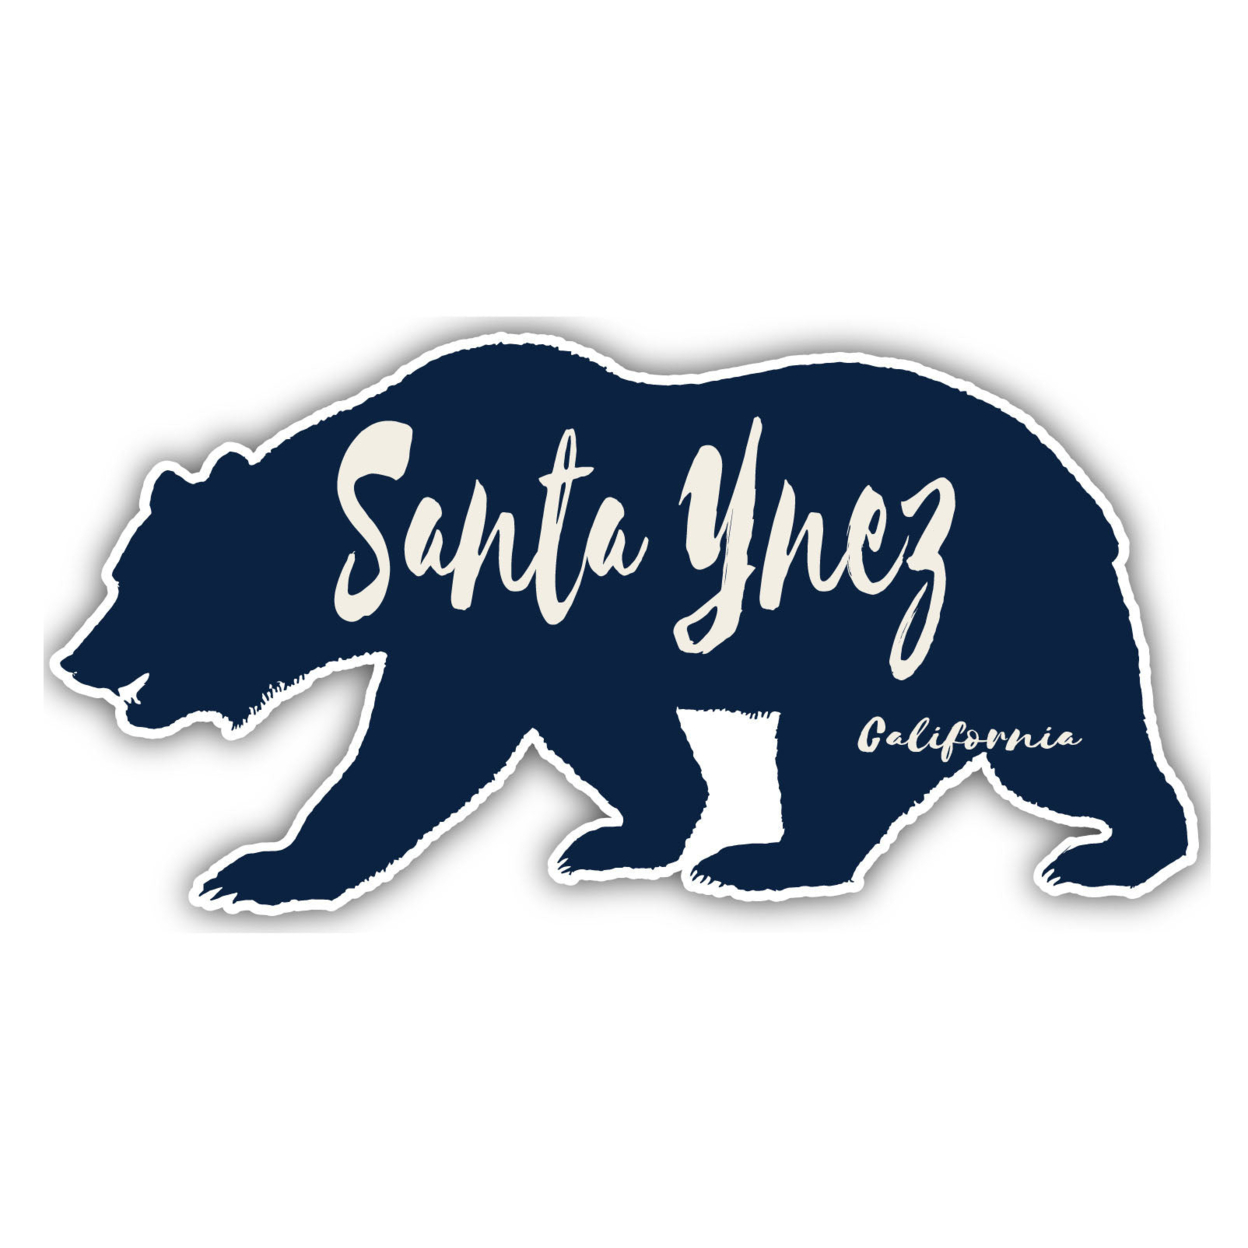 Santa Ynez California Souvenir Decorative Stickers (Choose Theme And Size) - Single Unit, 4-Inch, Camp Life